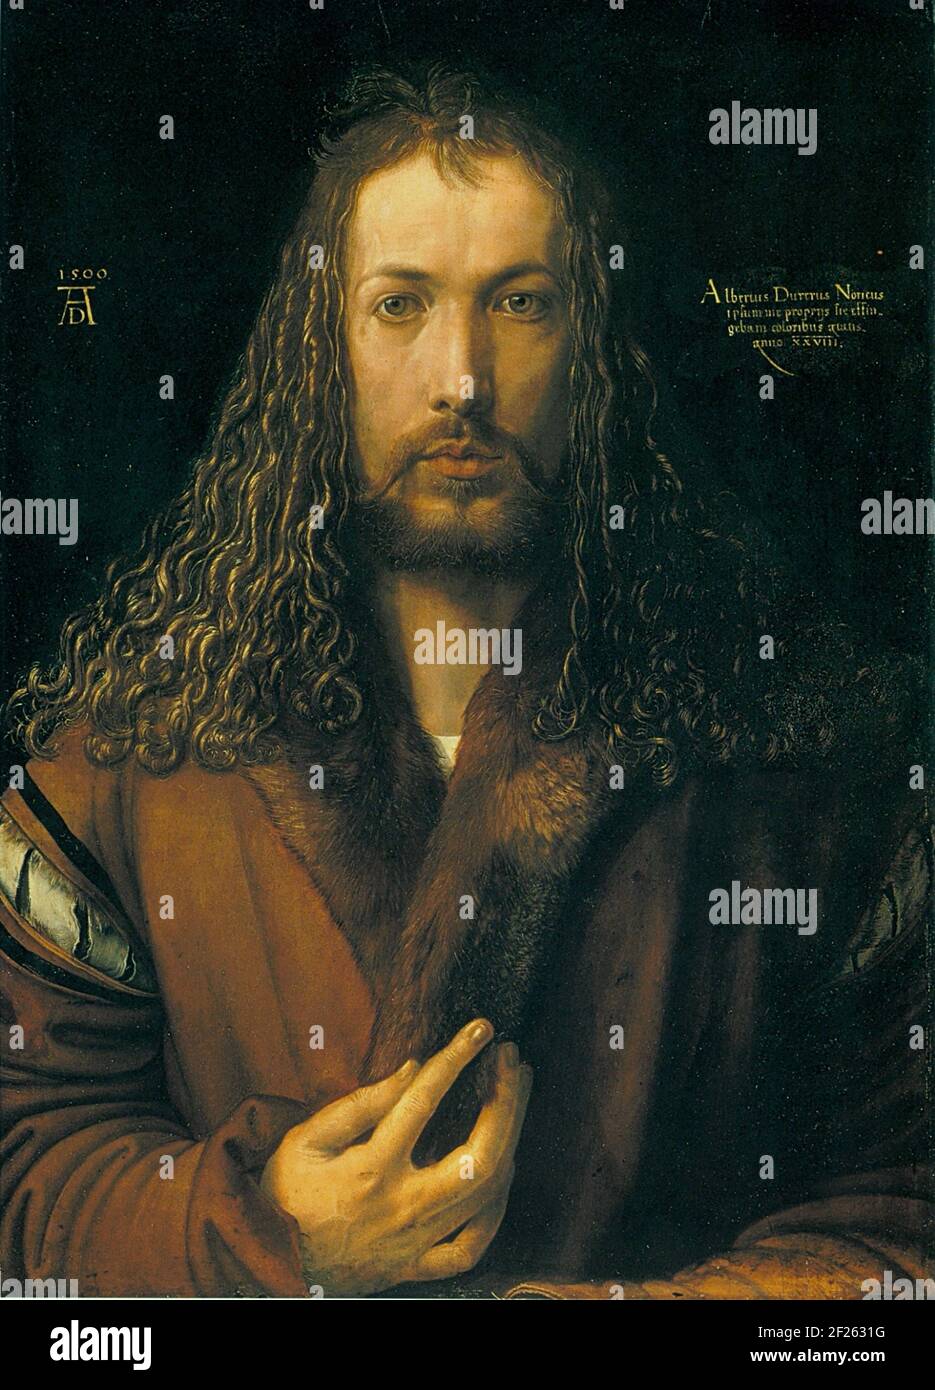 Albrecht Dürer - Self Portrait - 1500 Stock Photo